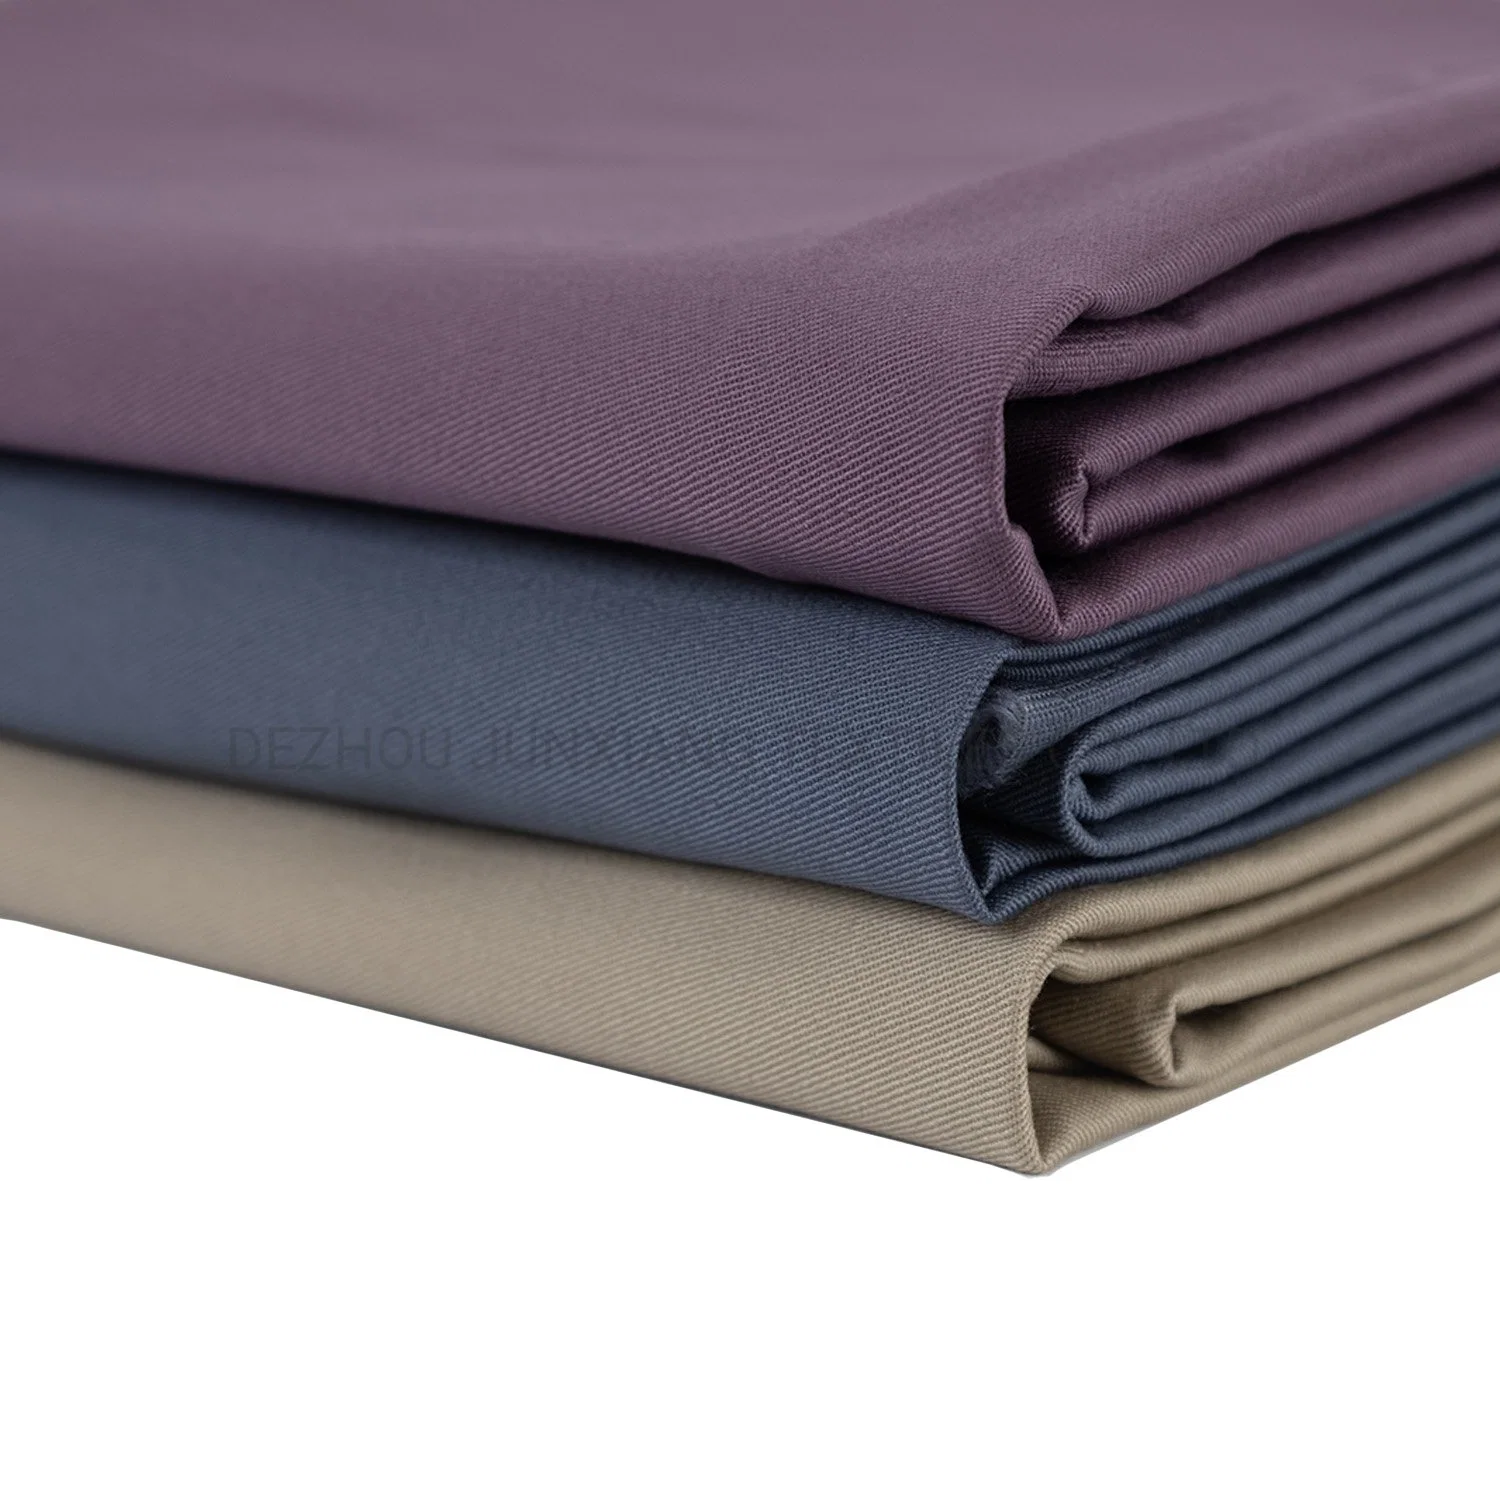 Scrubs Fabric Weft Spandex 133*72, 32s*32s+40d, CVC 55% Cotton / 42% Poly / 3% Spandex Weft